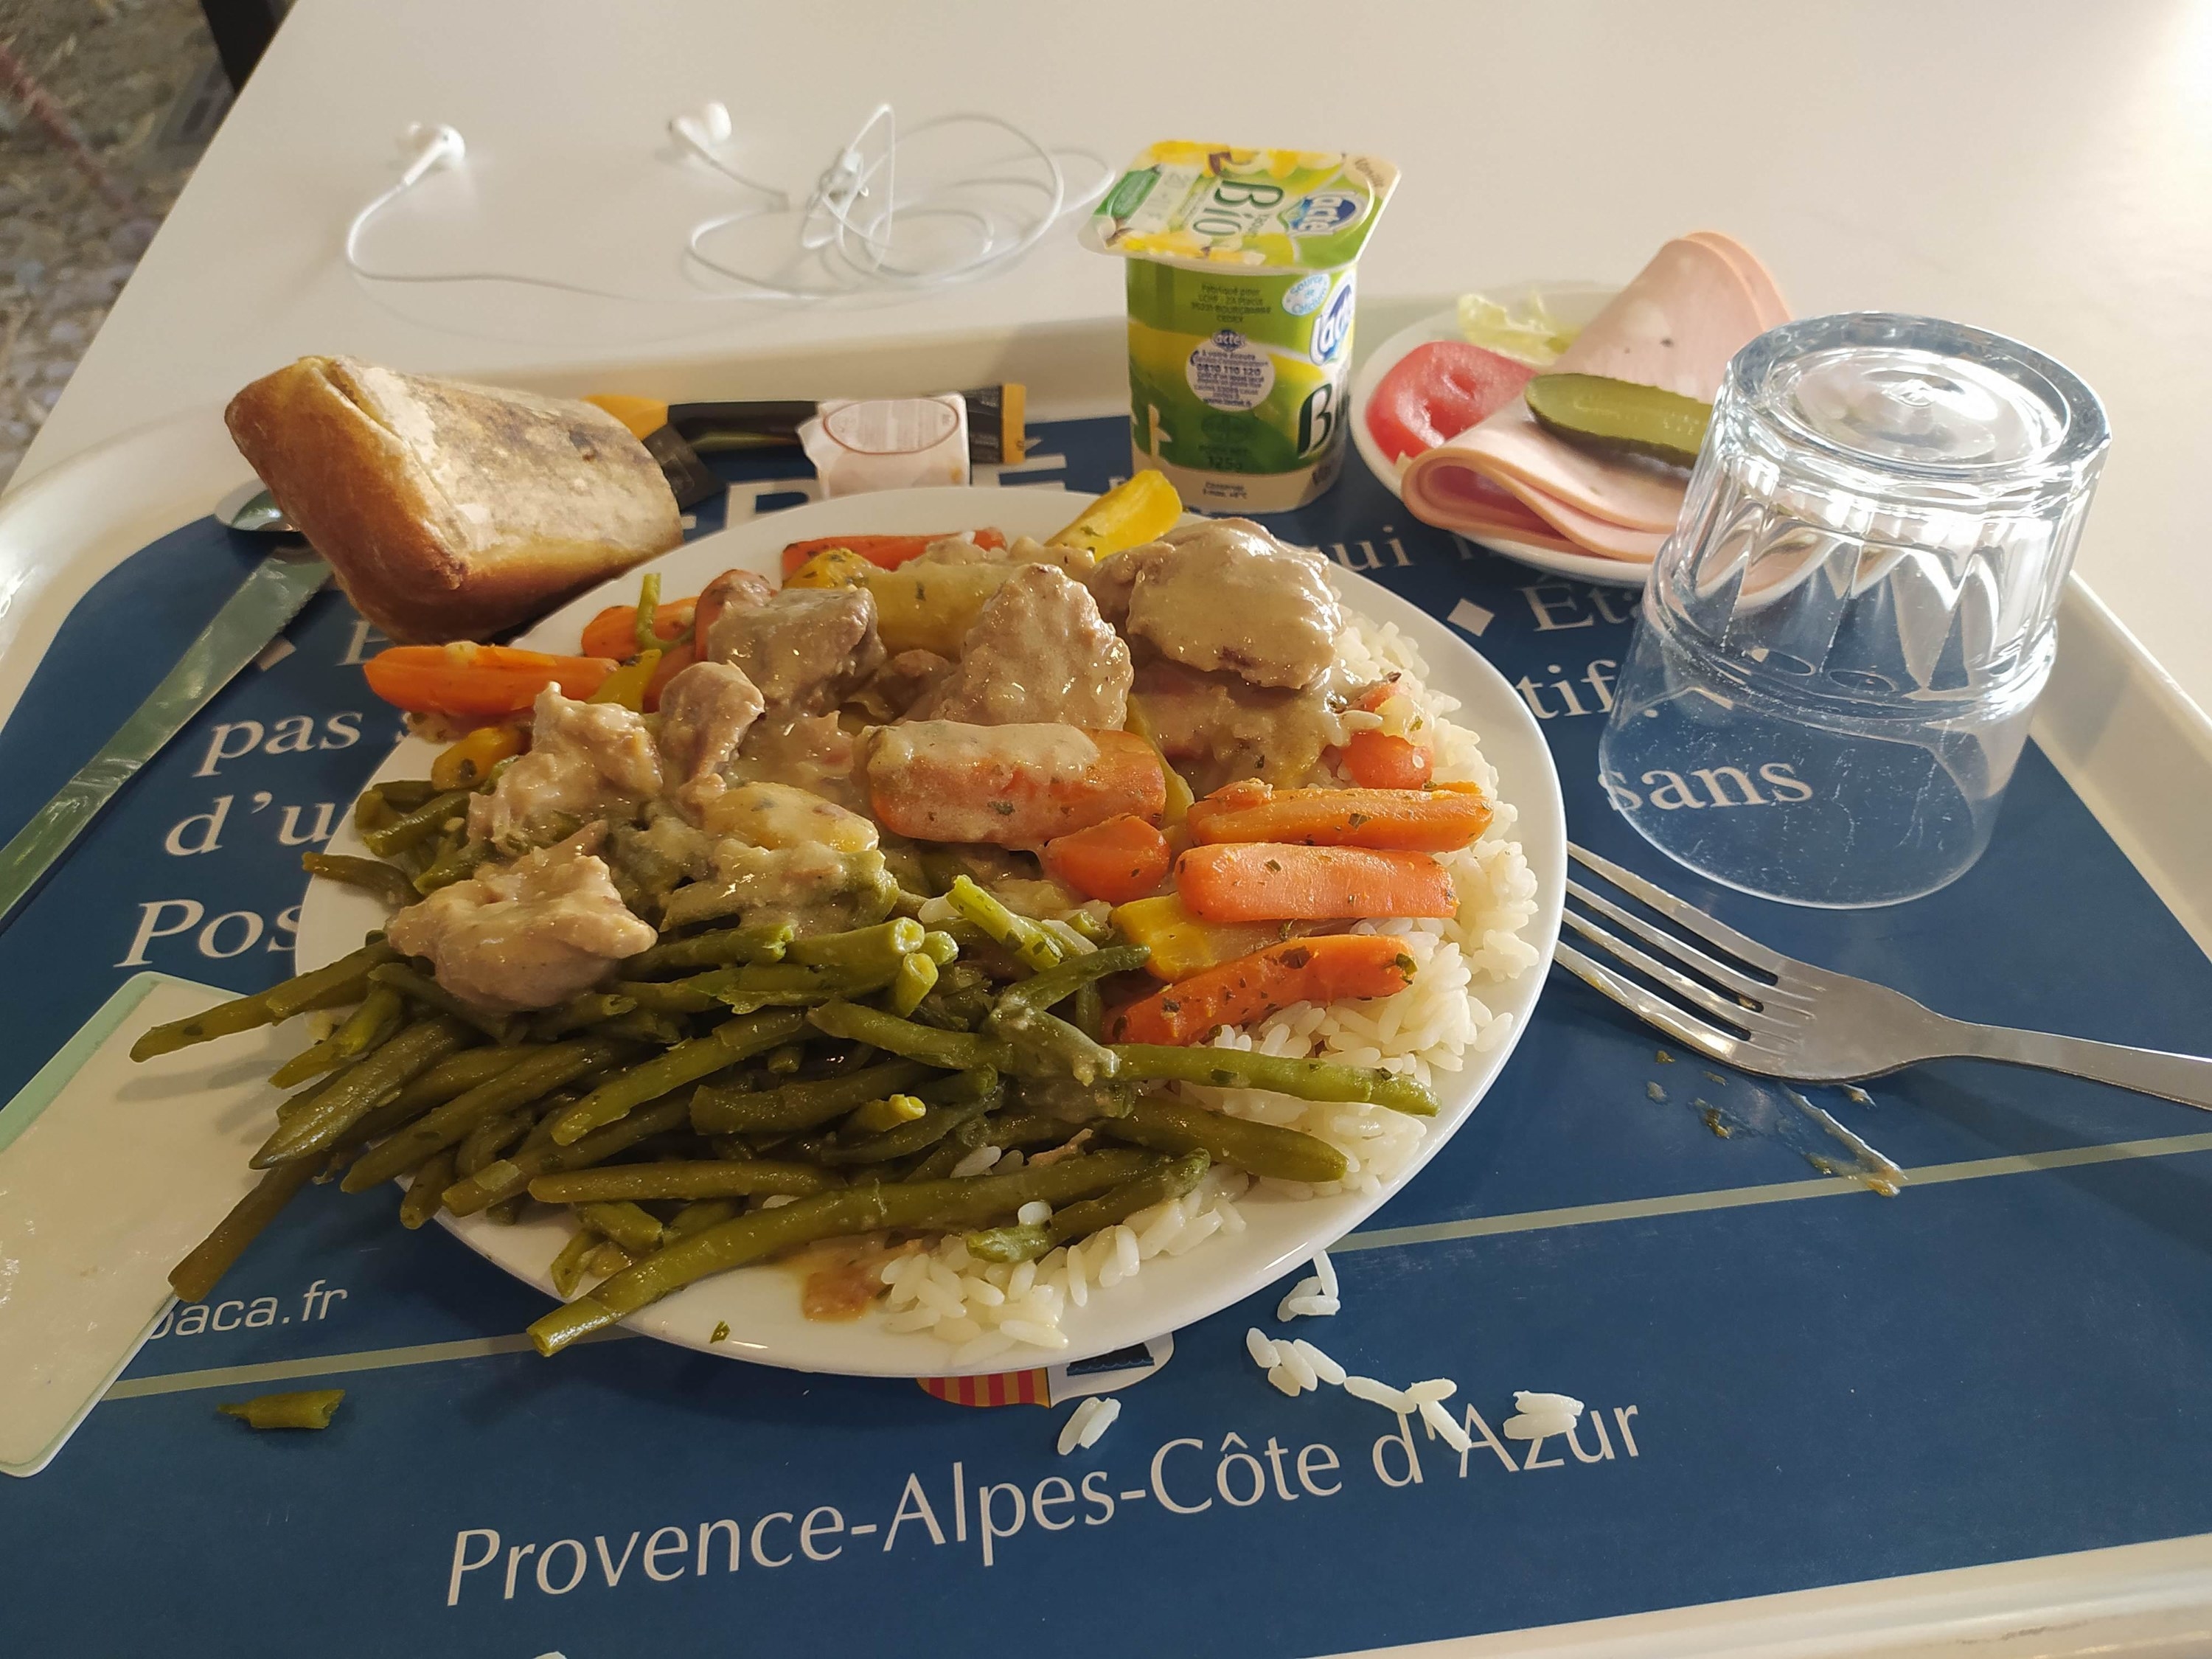 French school lunch